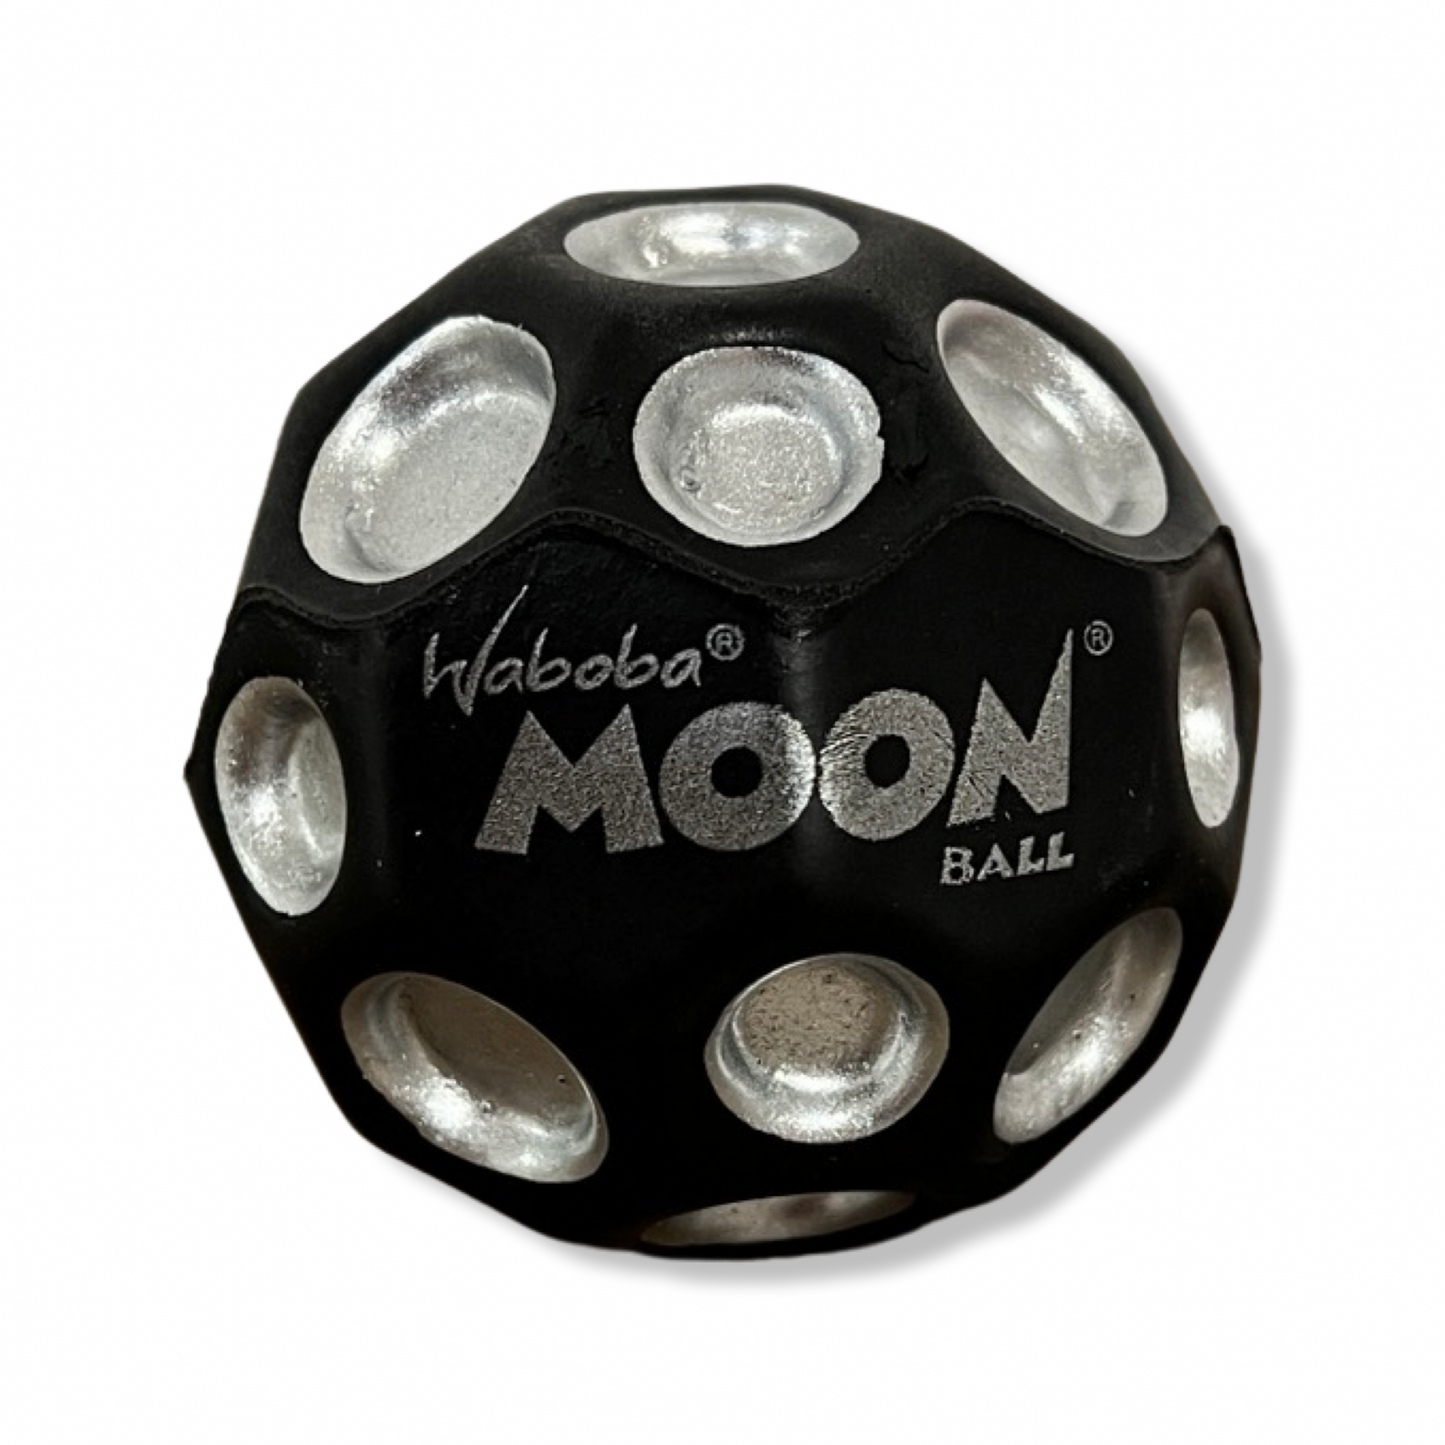 Moonball "Dark Side of the Moon" schwarz silber